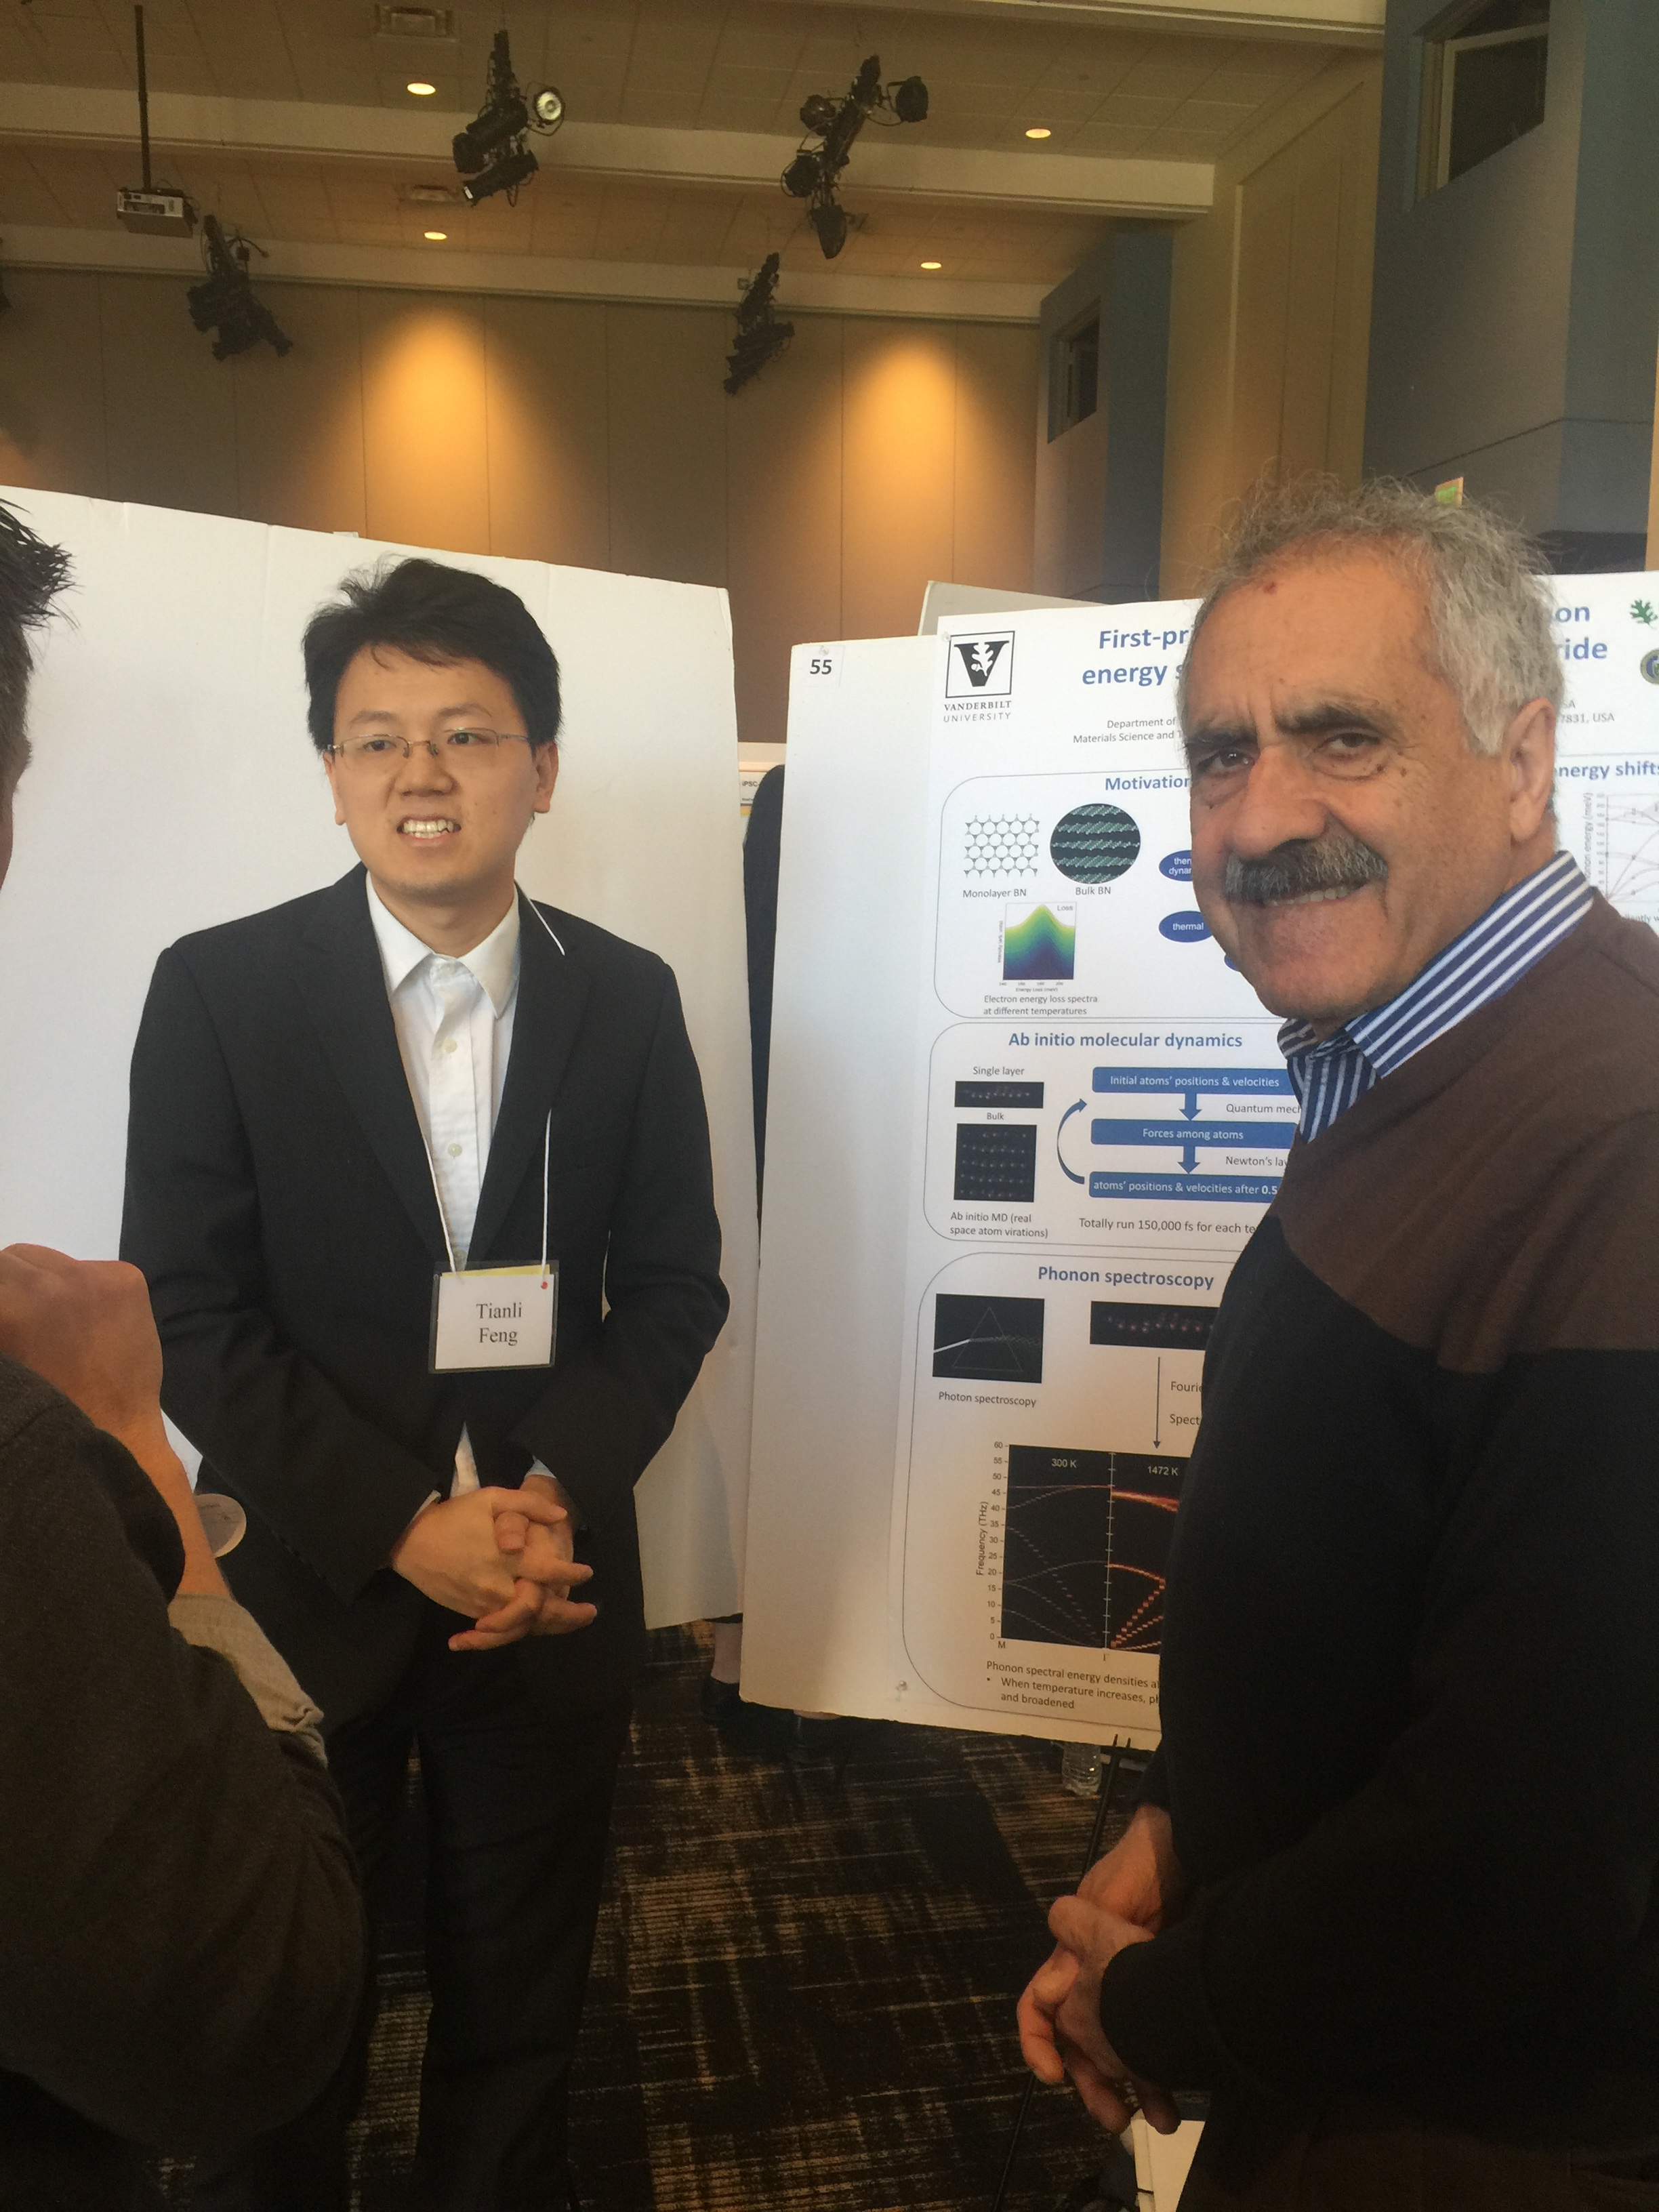 Vanderbilt Postdoctoral Affairs 2018 Symposium: Tianli Feng presenting his poster with Professor Pantelides.